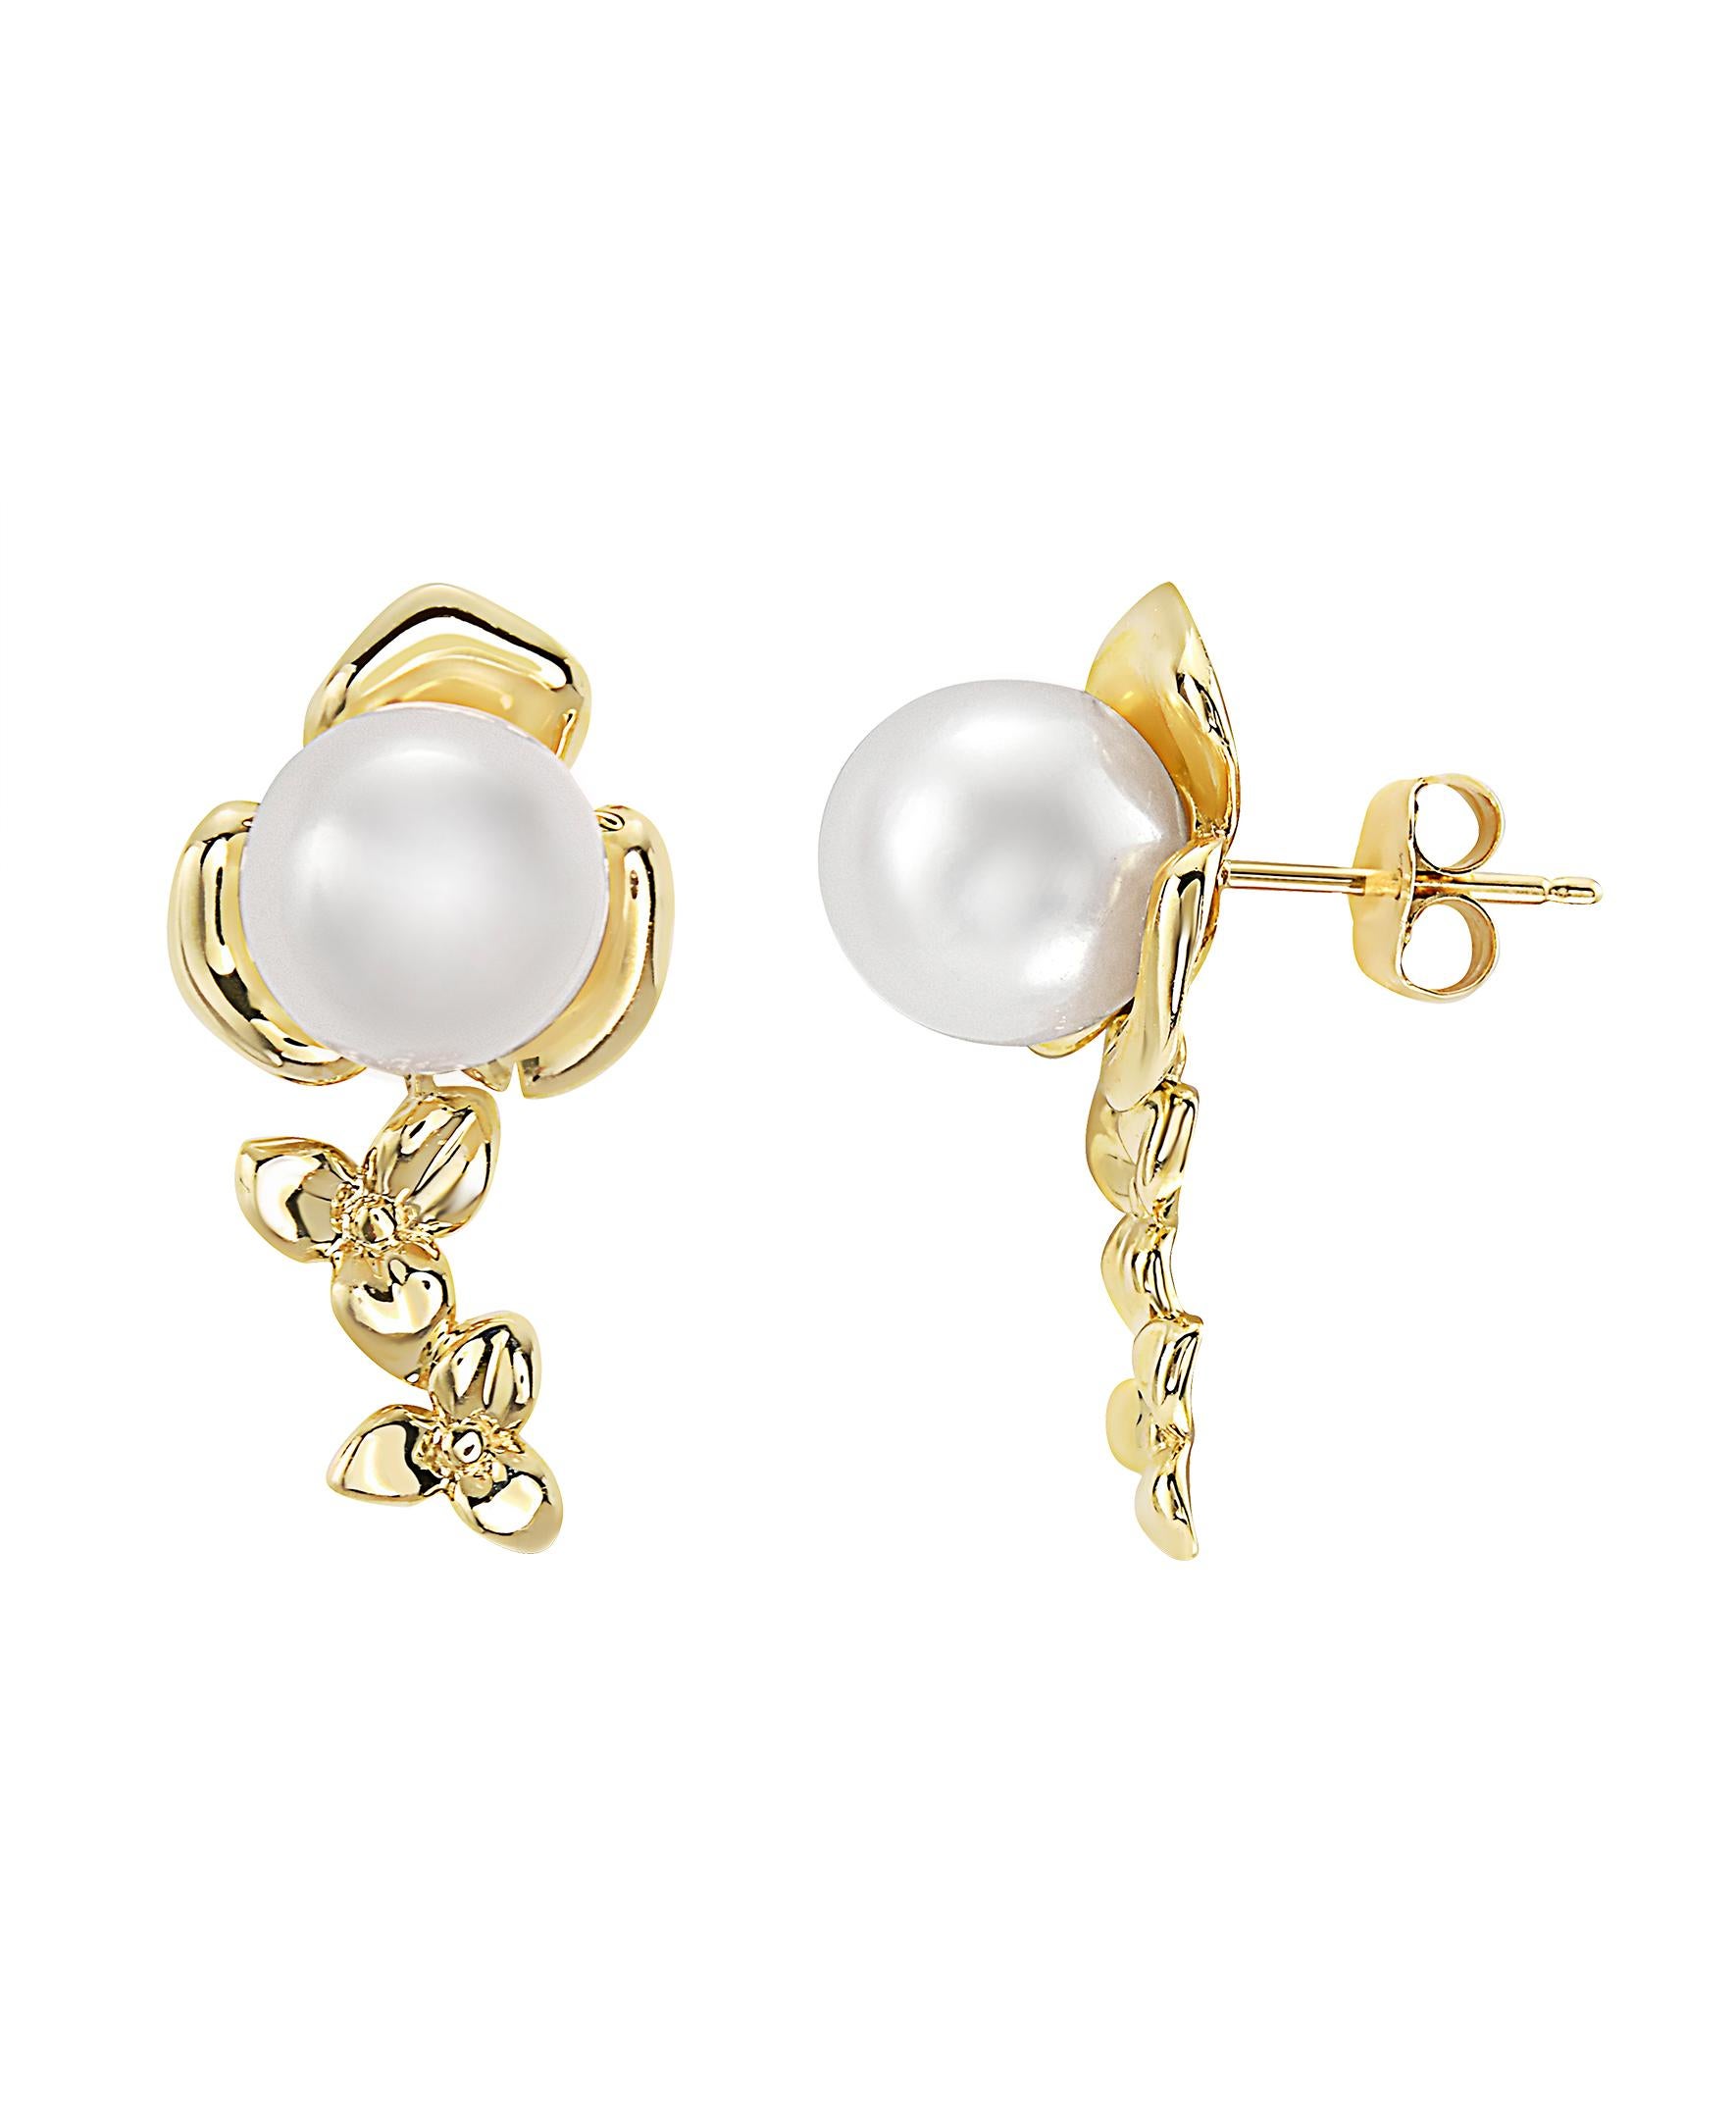 Contemporary Effy 14 Karat Yellow Gold Diamond & Pearl Earrings For Sale